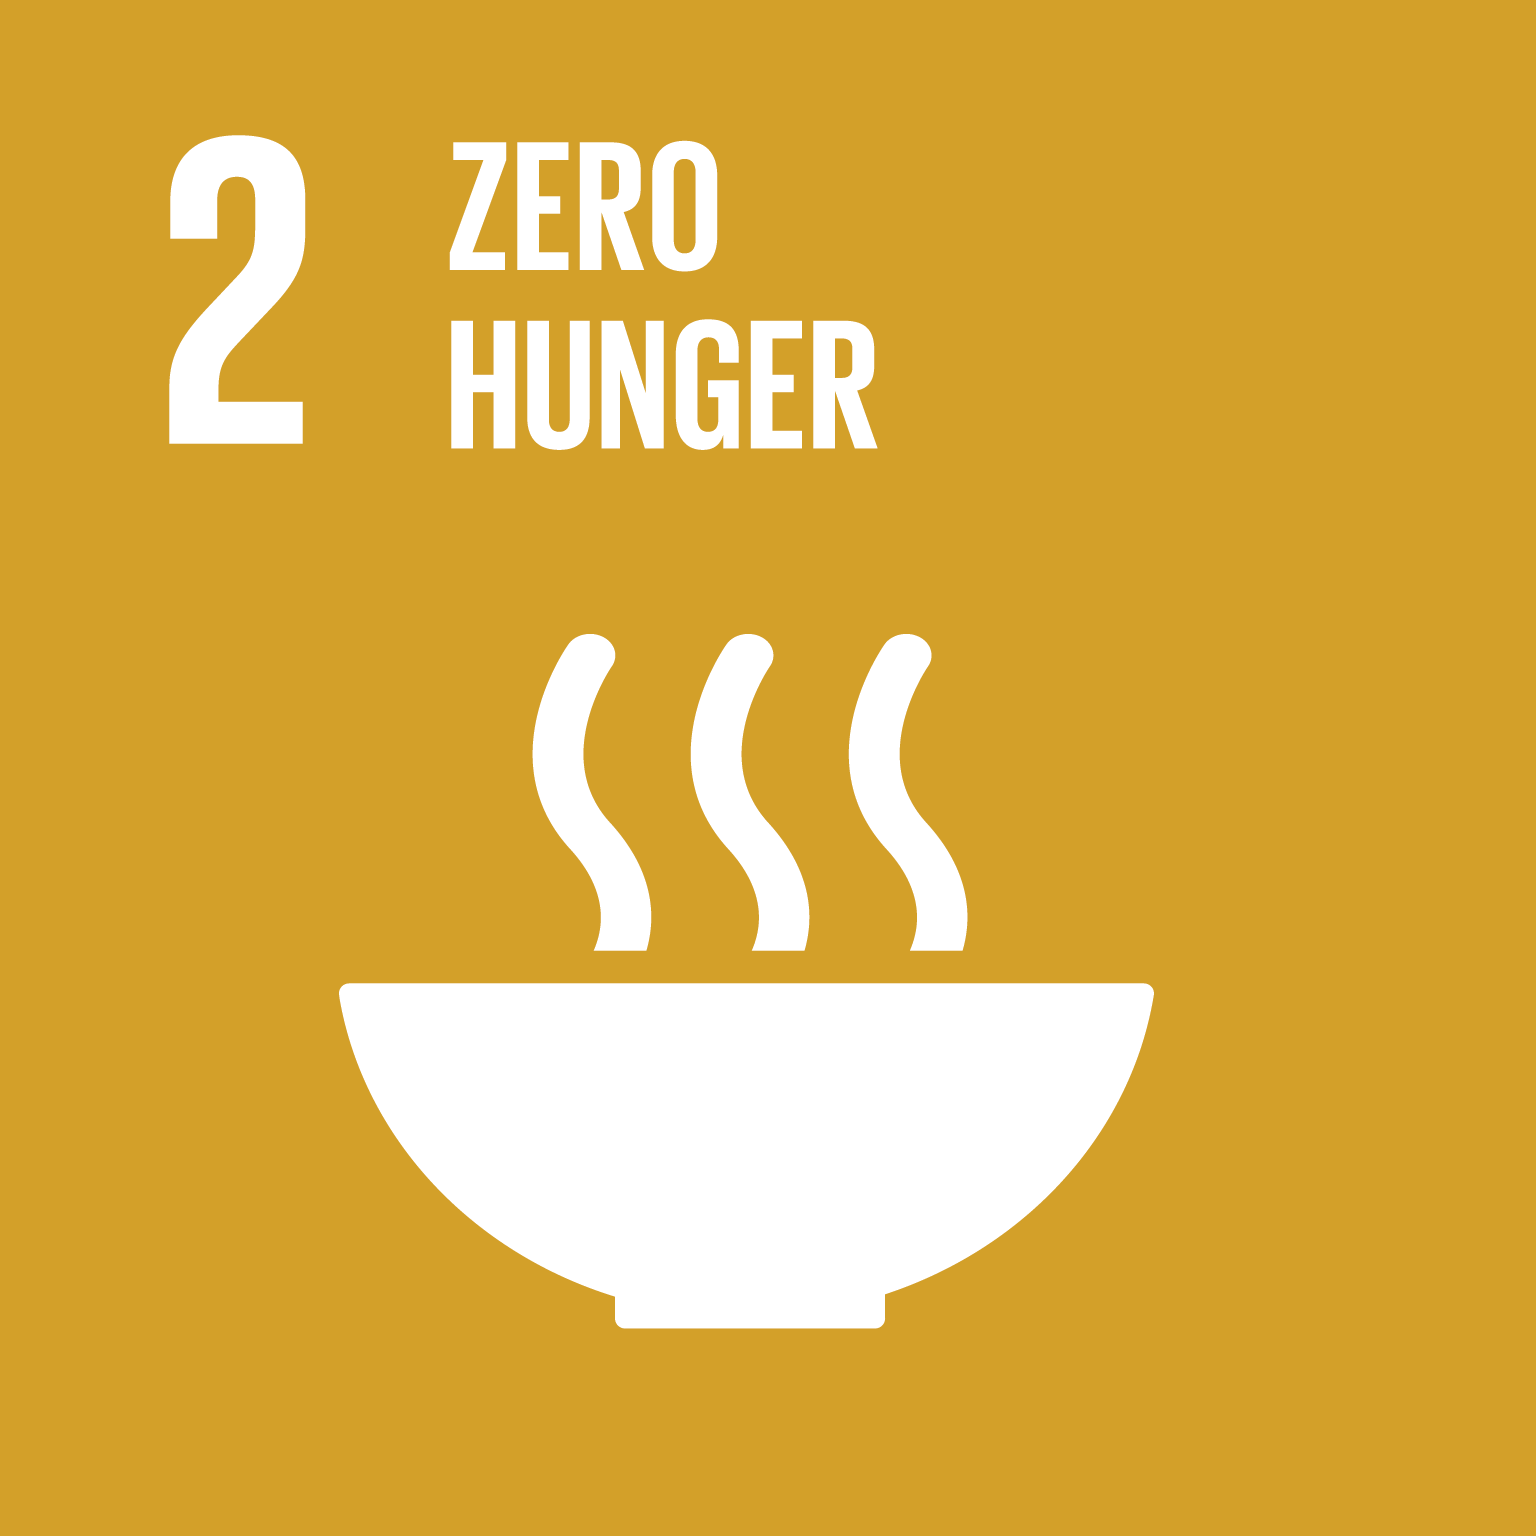 Yellow Number 2 Logo - Goal 2: Zero hunger